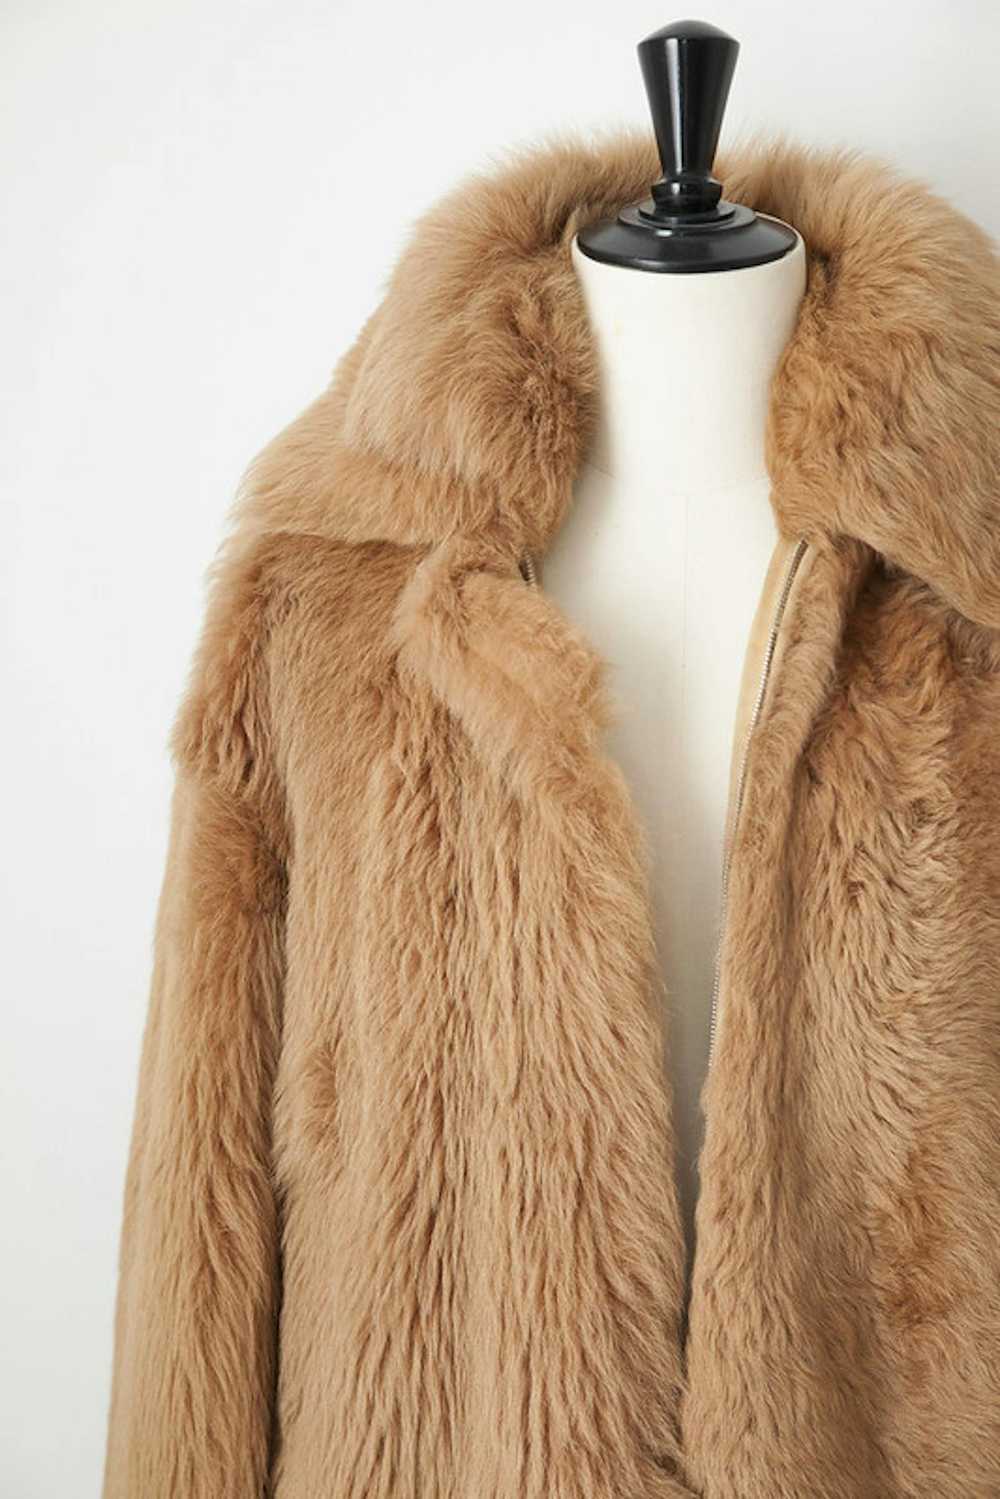 Helmut Lang AW00 fur coat - image 3